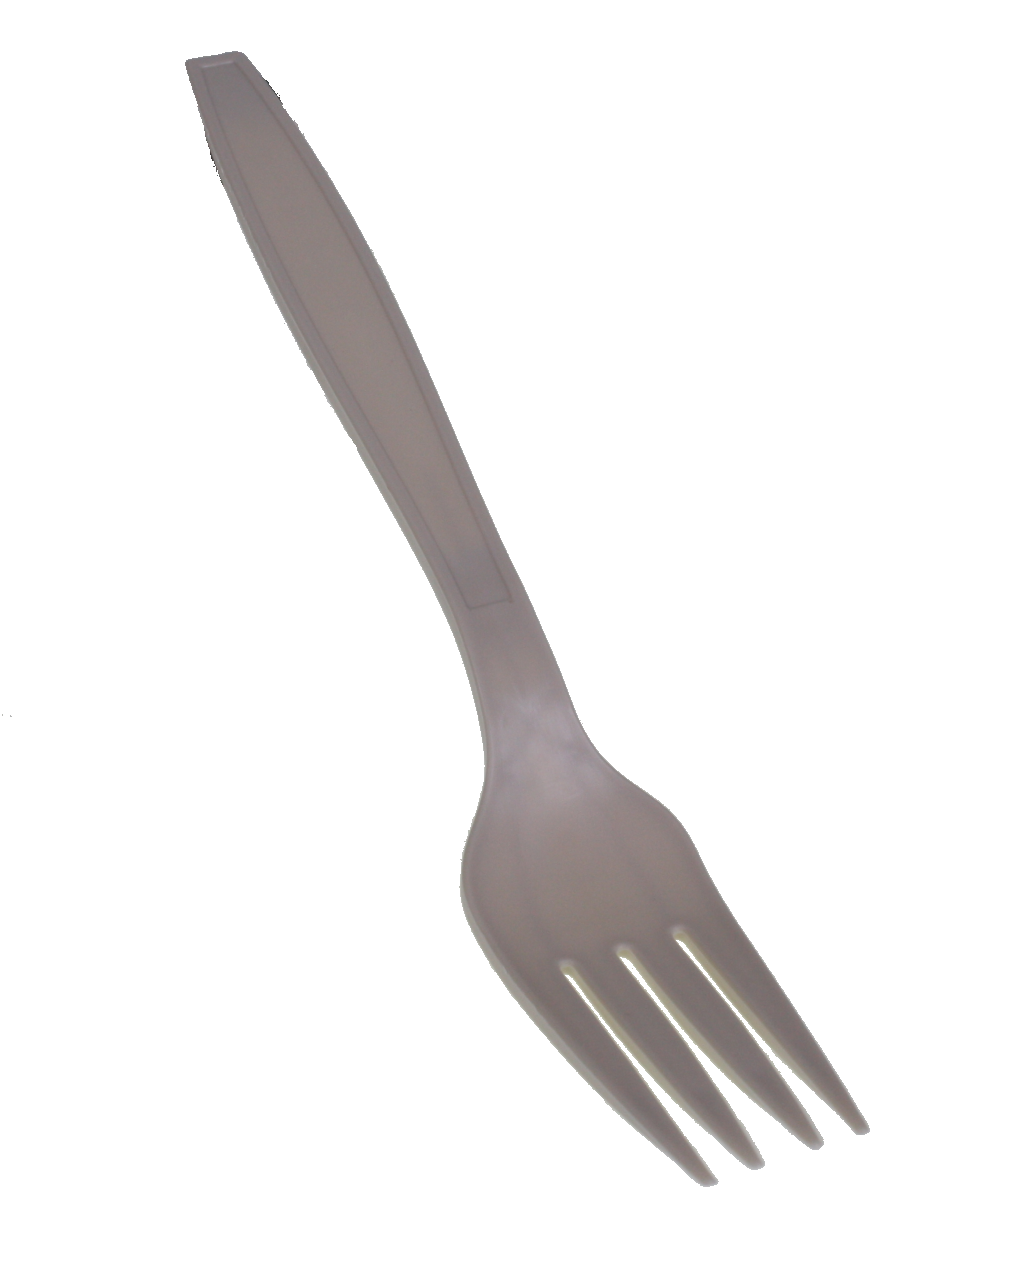 A single corn based fork